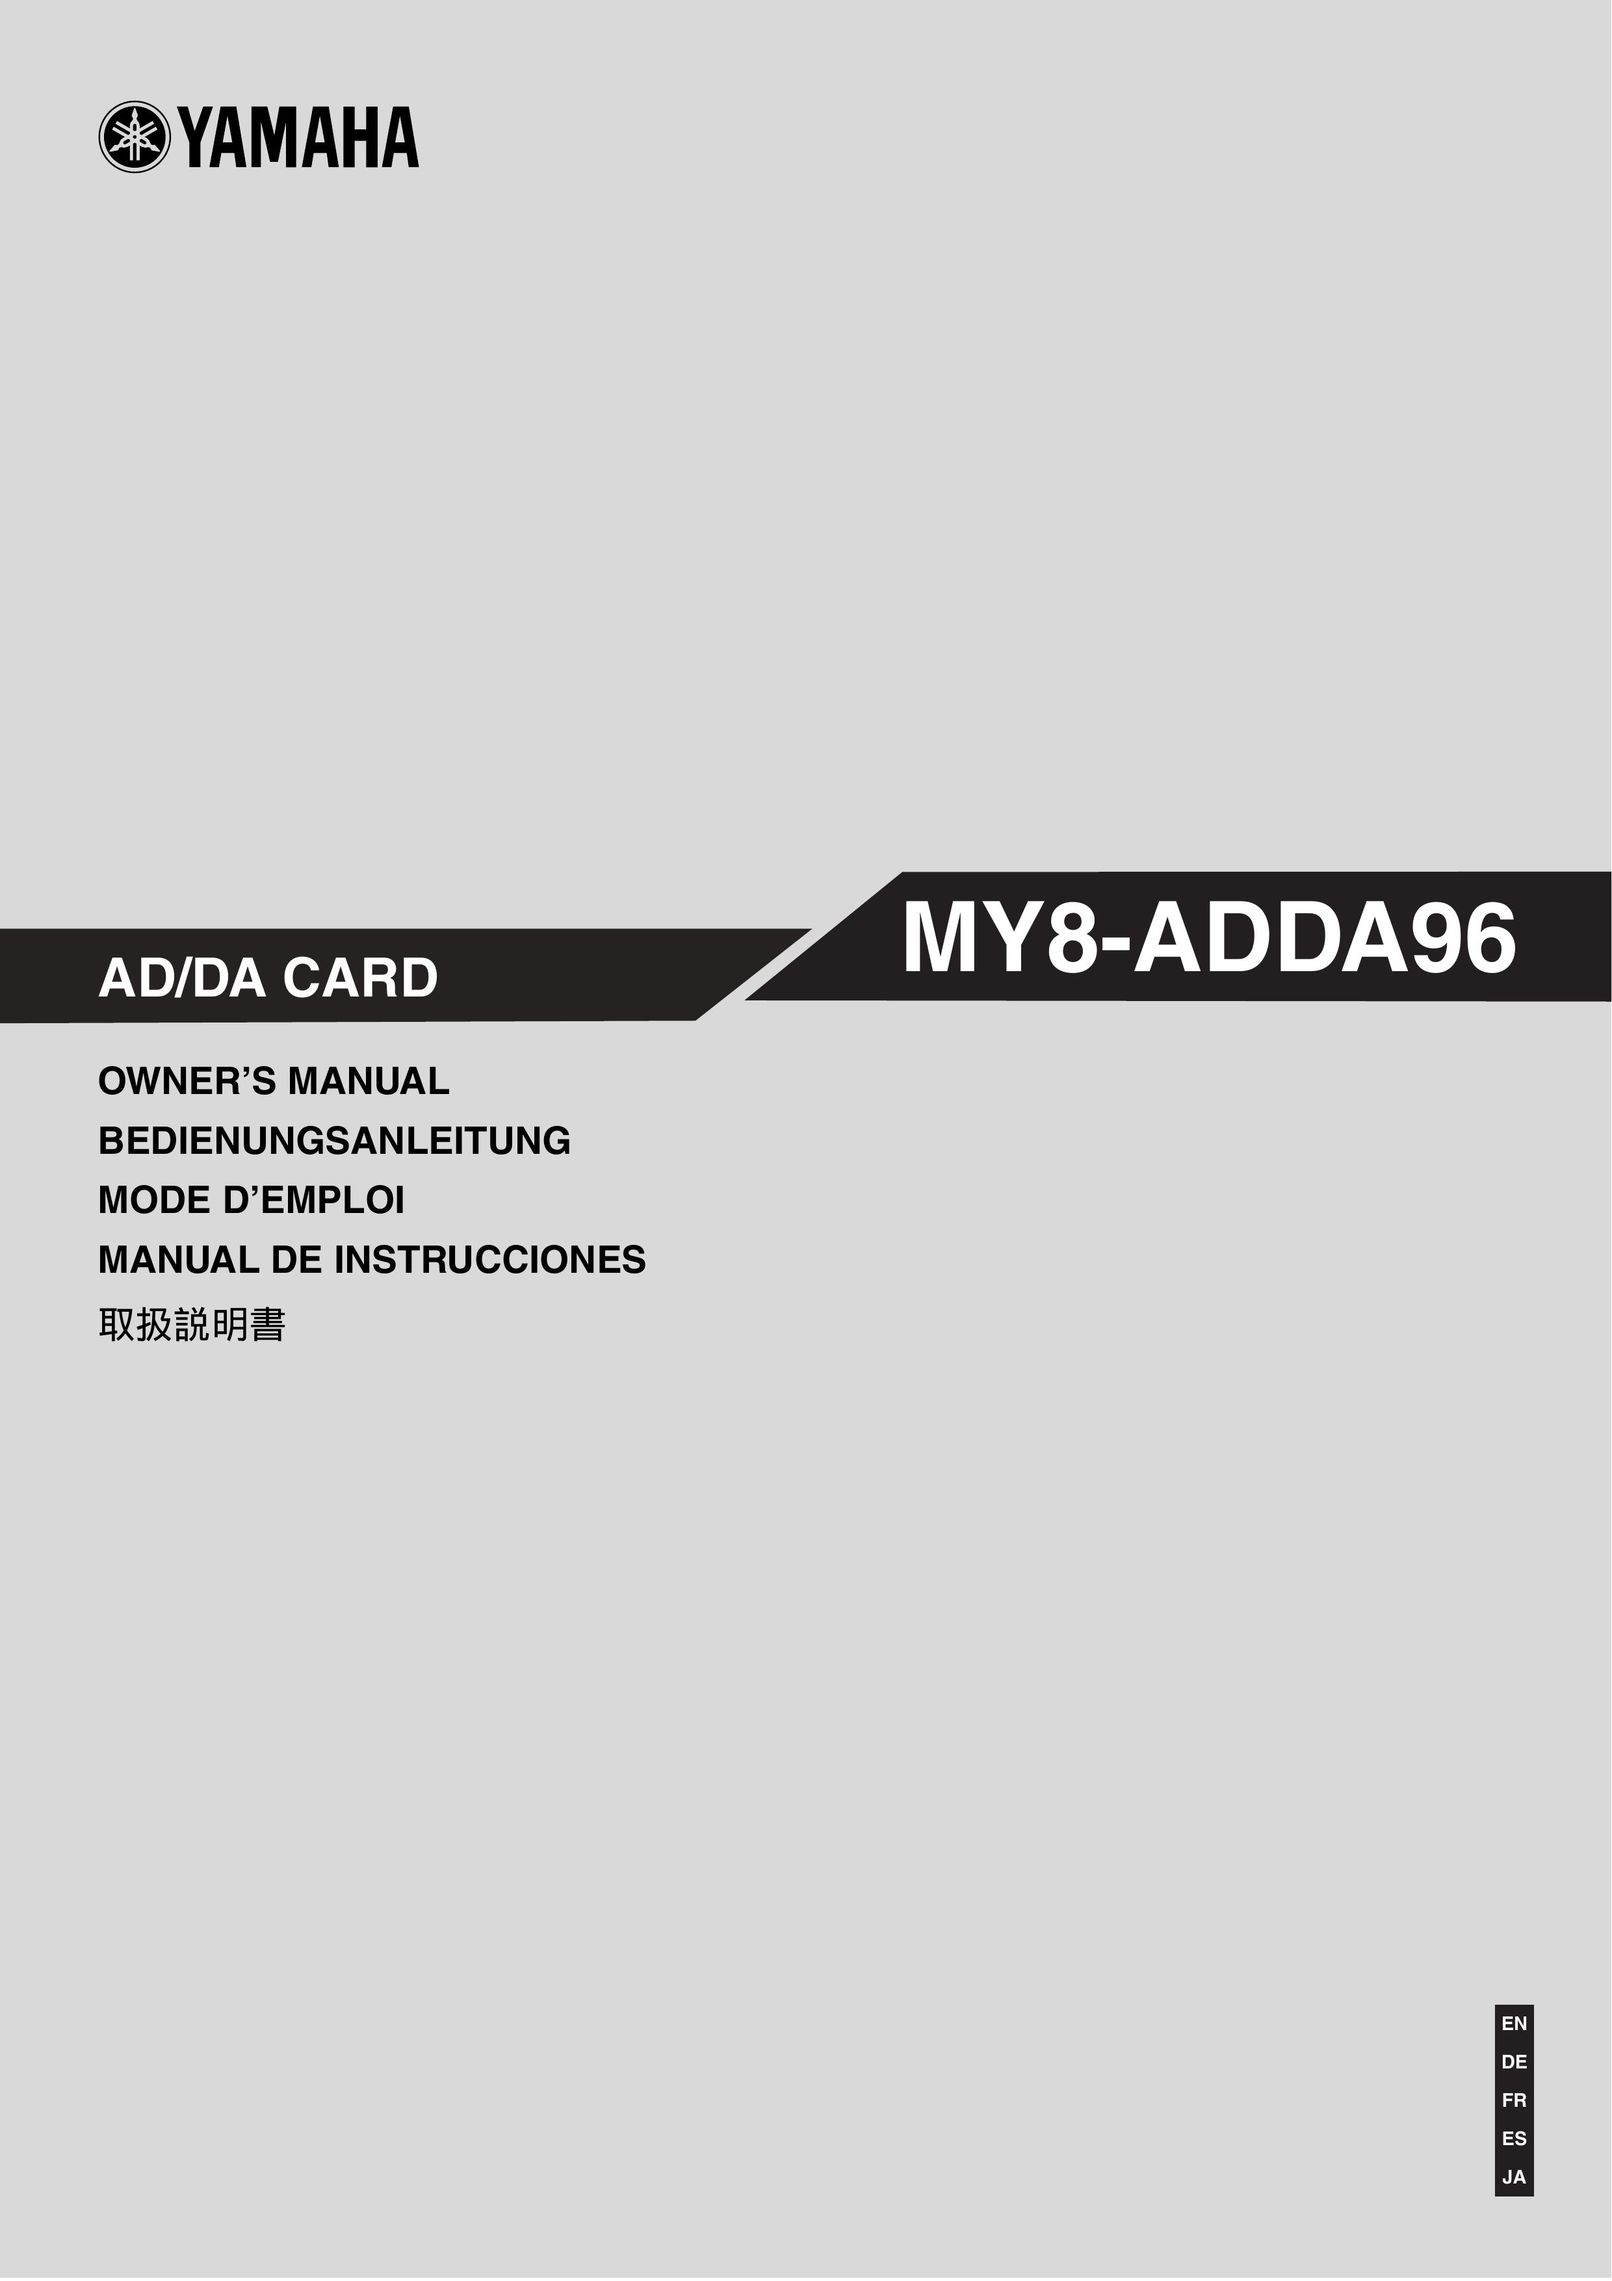 Yamaha MY8-ADDA96 Network Card User Manual